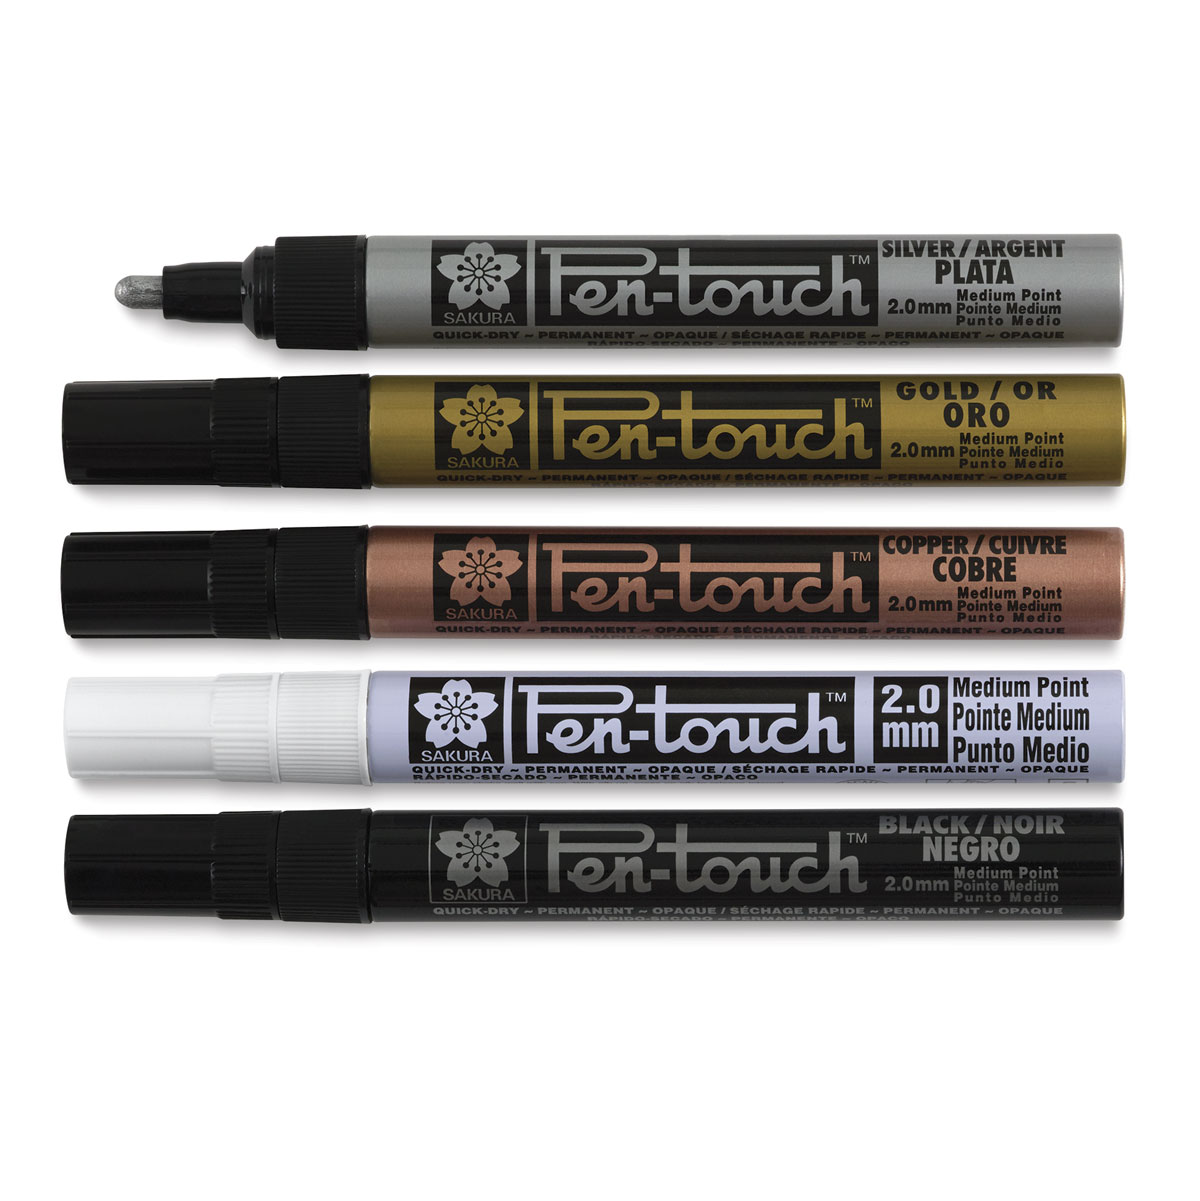 Sakura Pen-Touch Paint Marker – Was Here Store